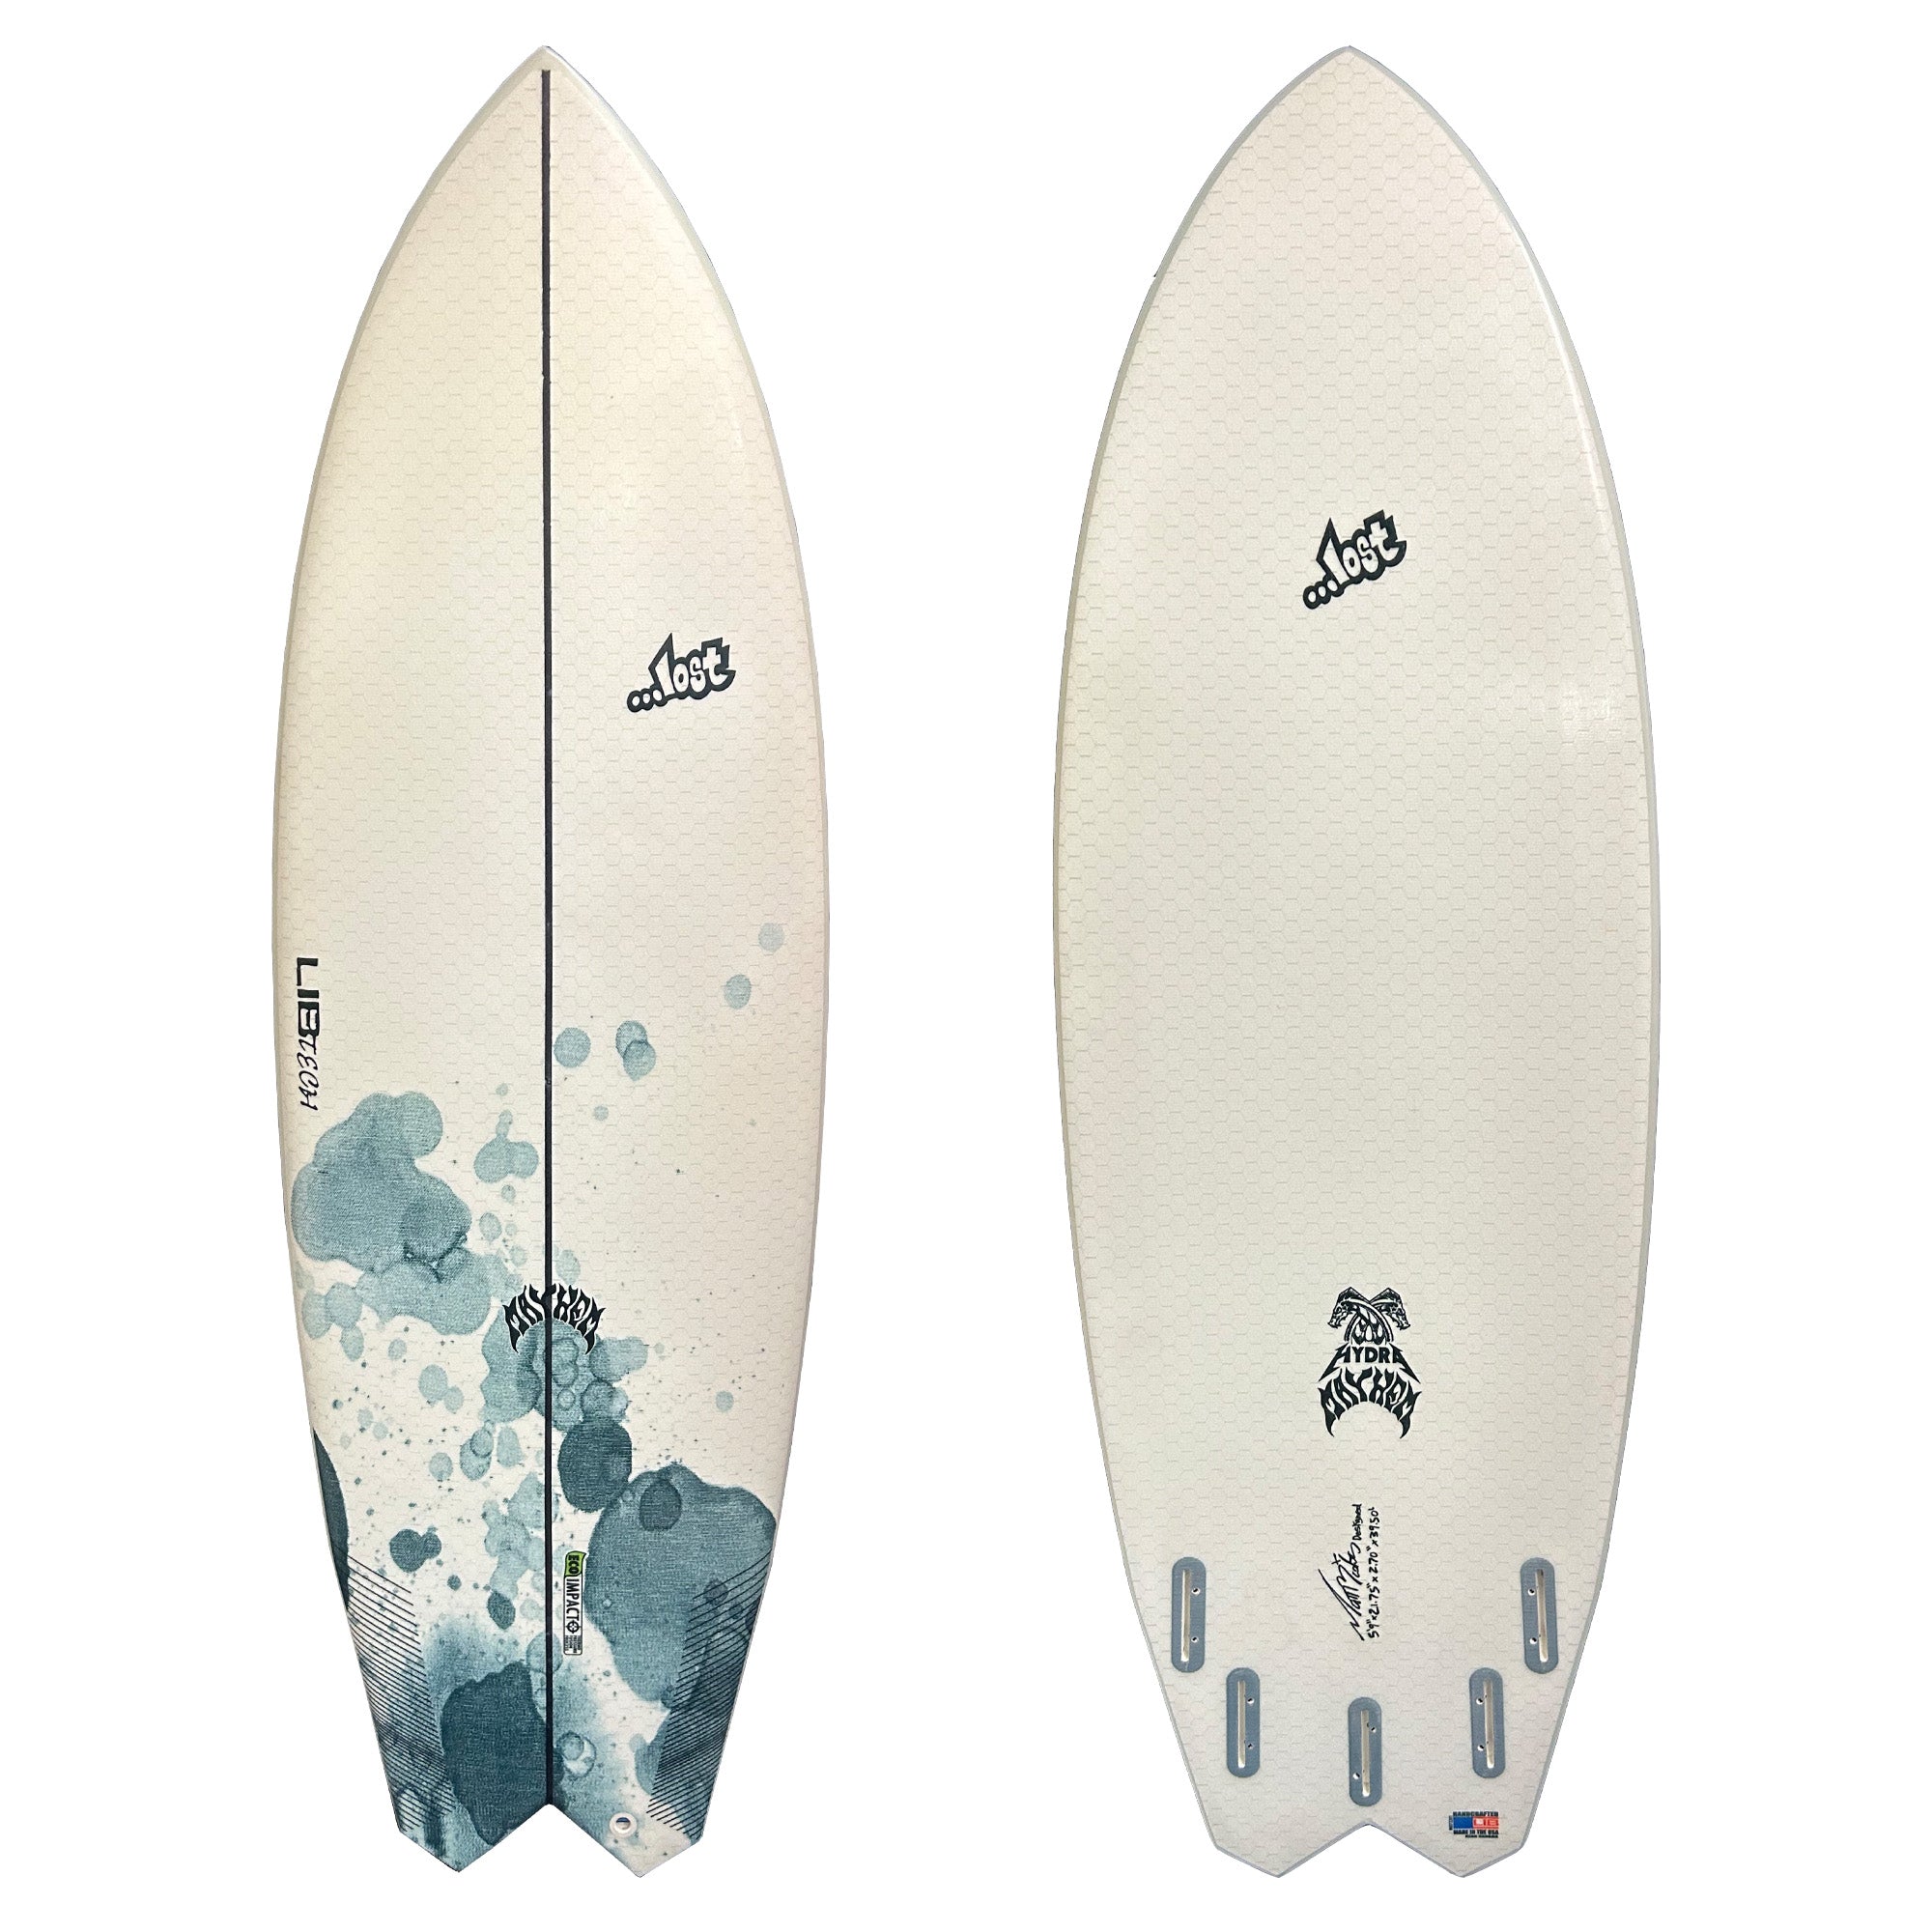 Lost Hydra 5'9 Used Surfboard